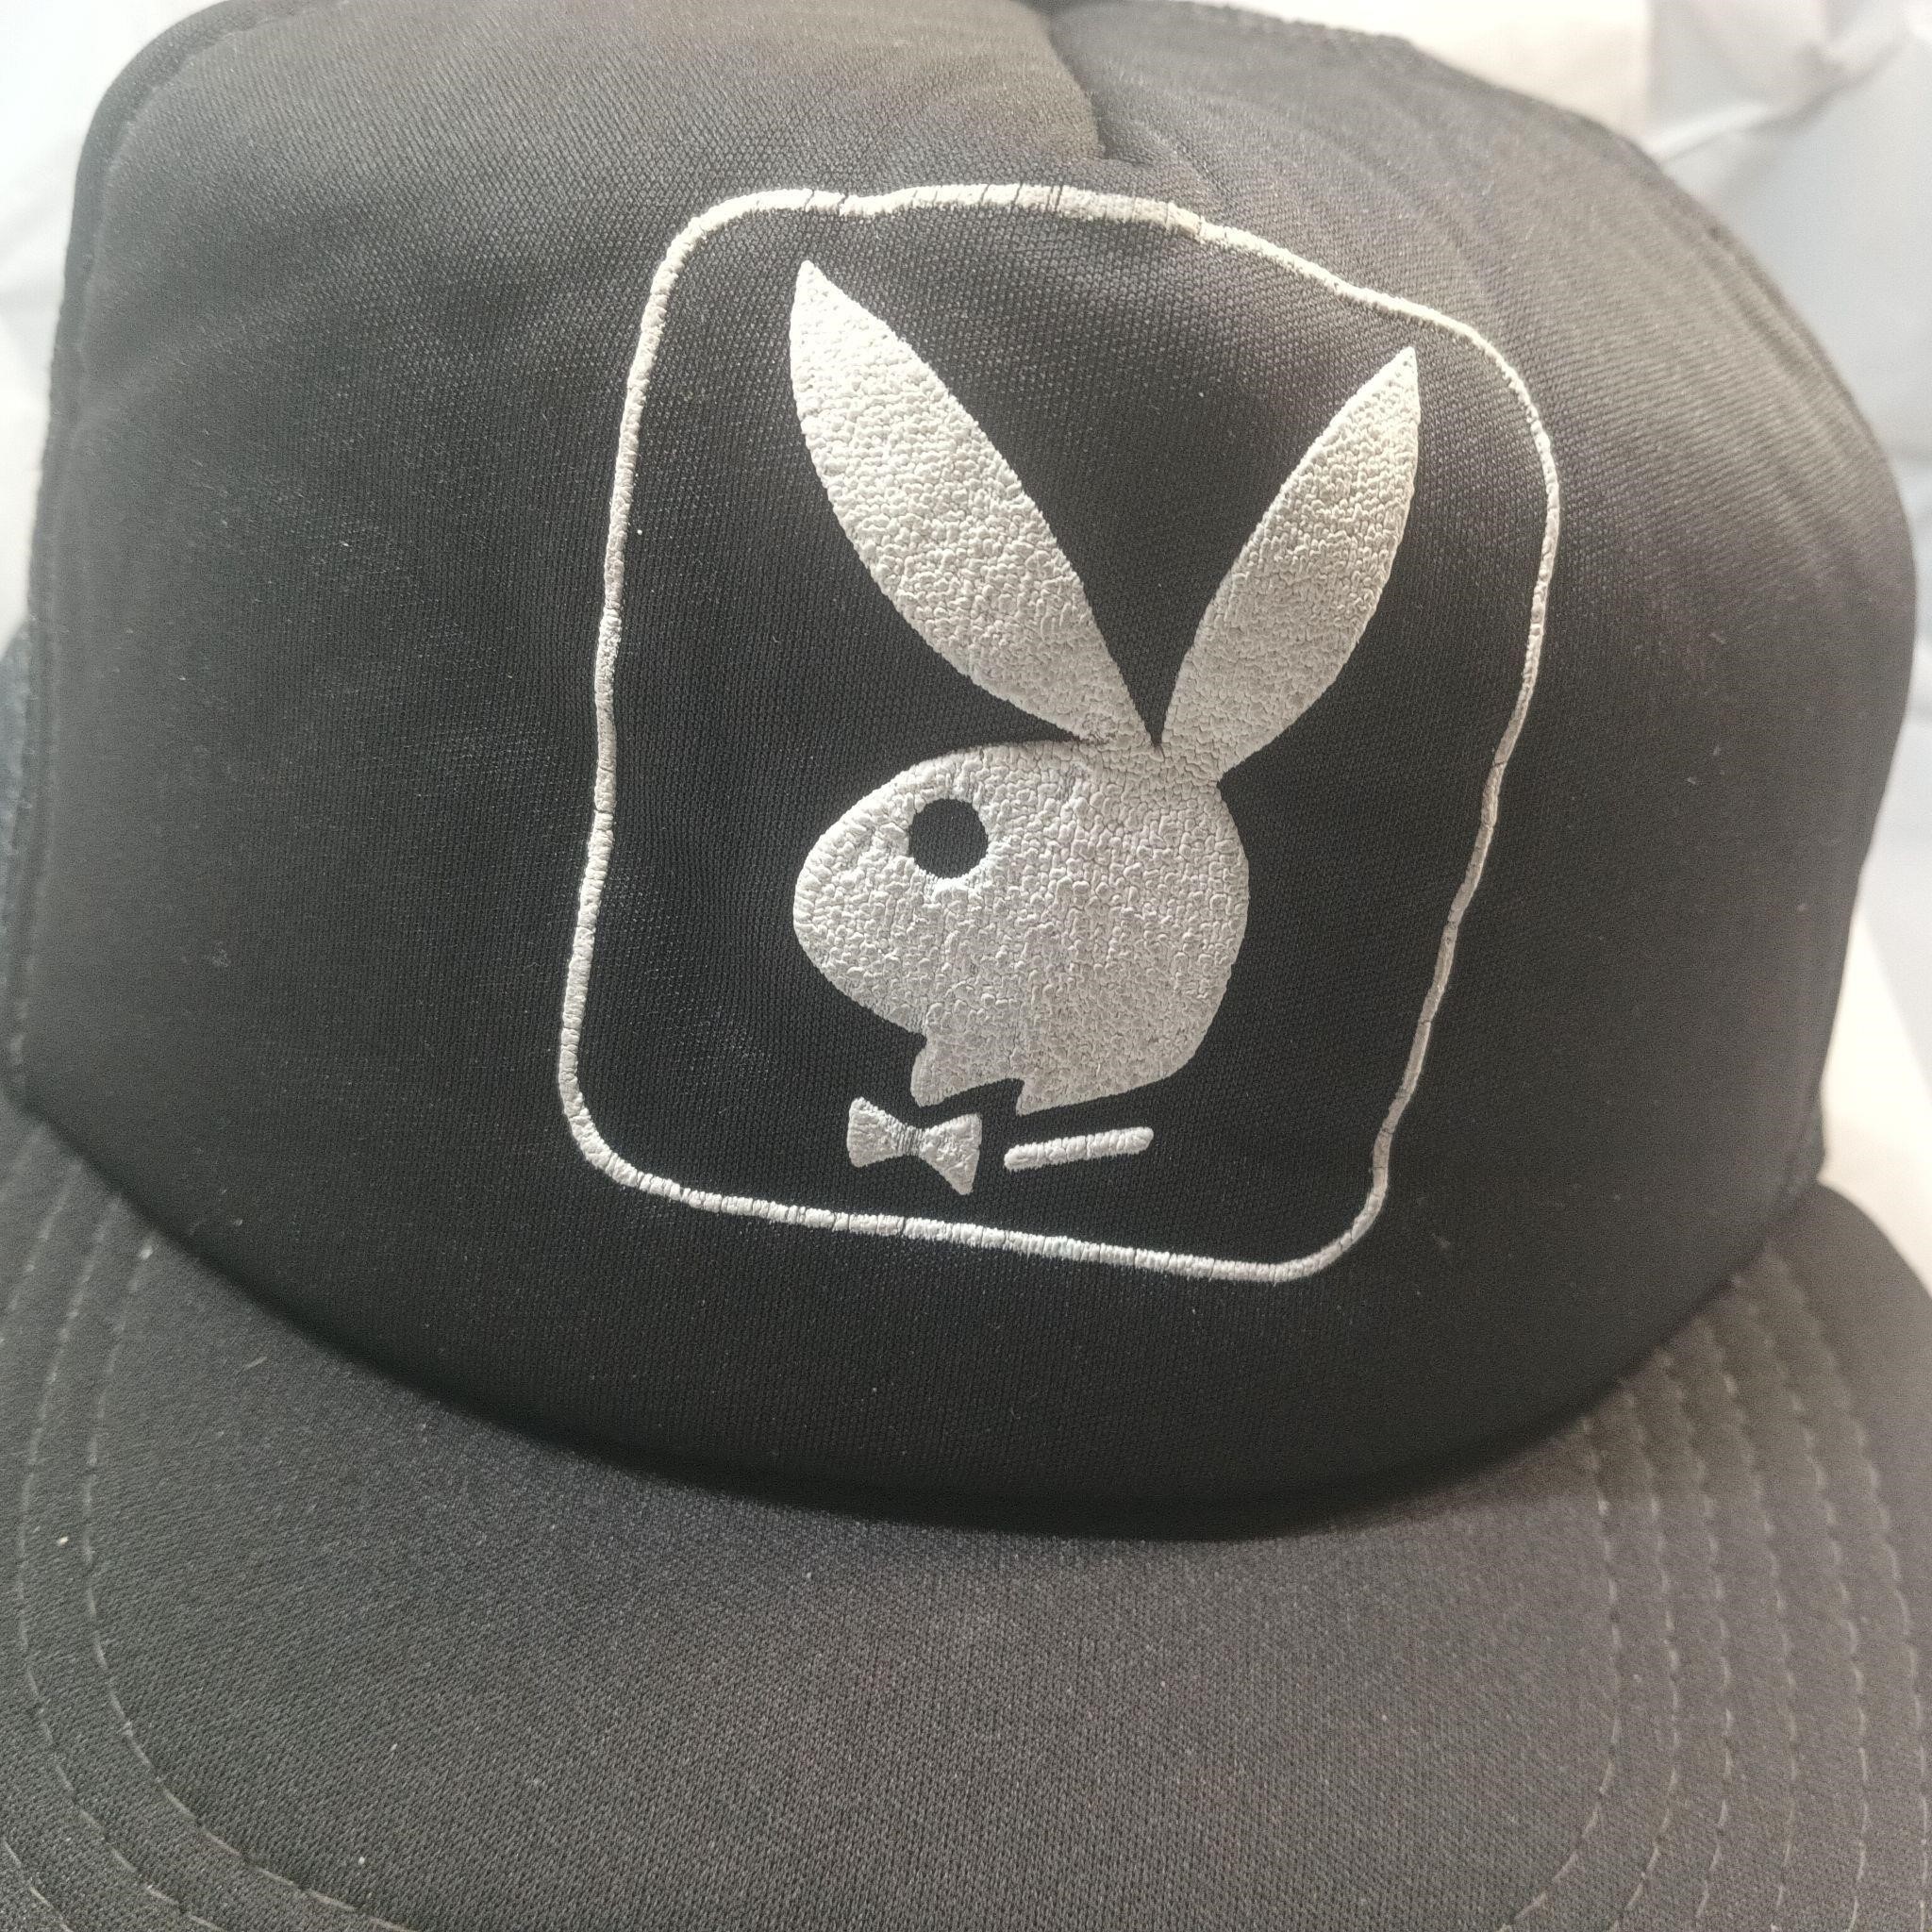 Vintage Snapback Playboy hat